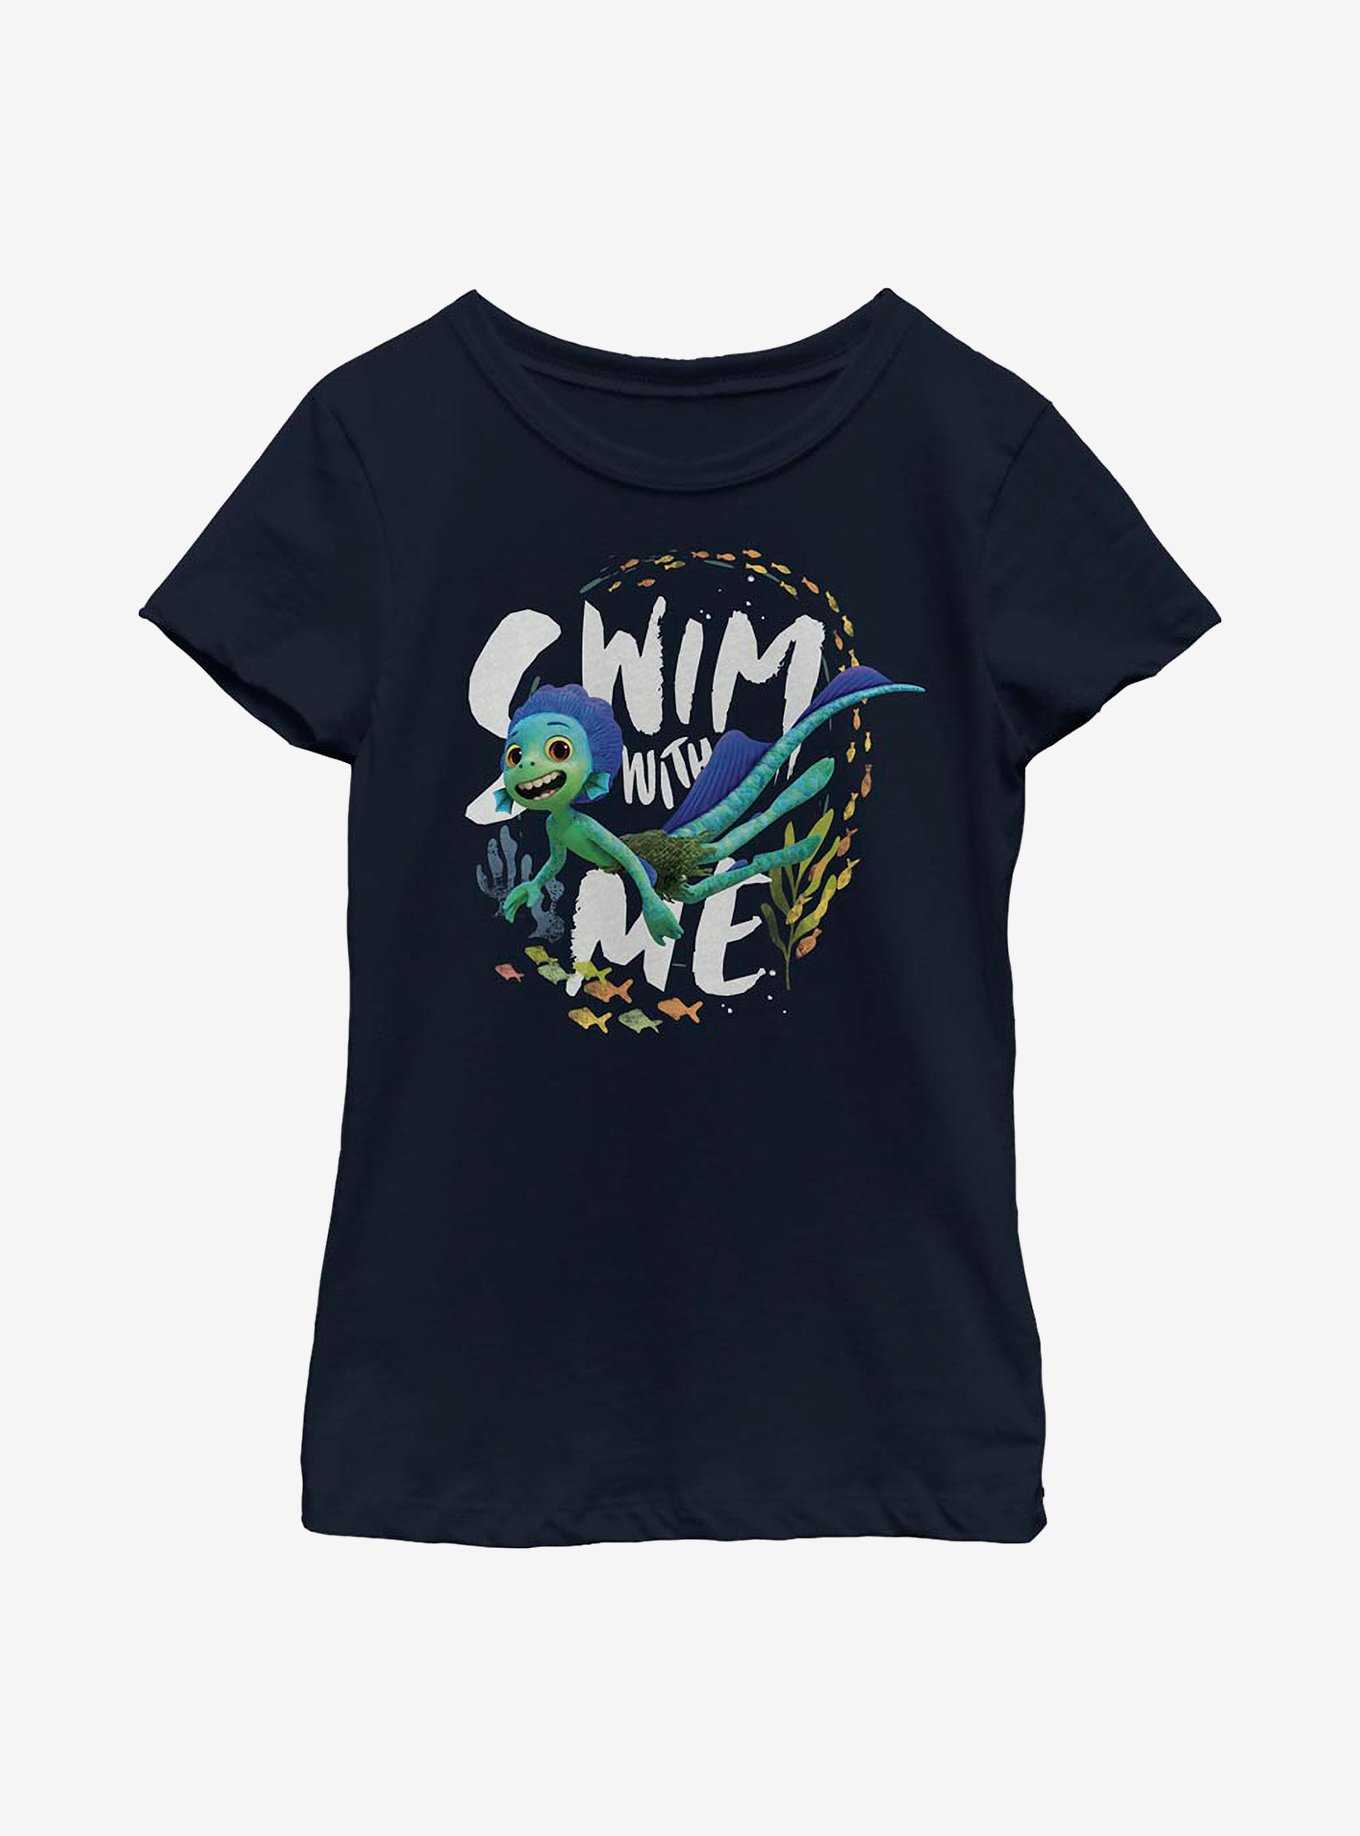 Disney Pixar Luca Swim With Me Sea Monster Youth Girls T-Shirt, , hi-res